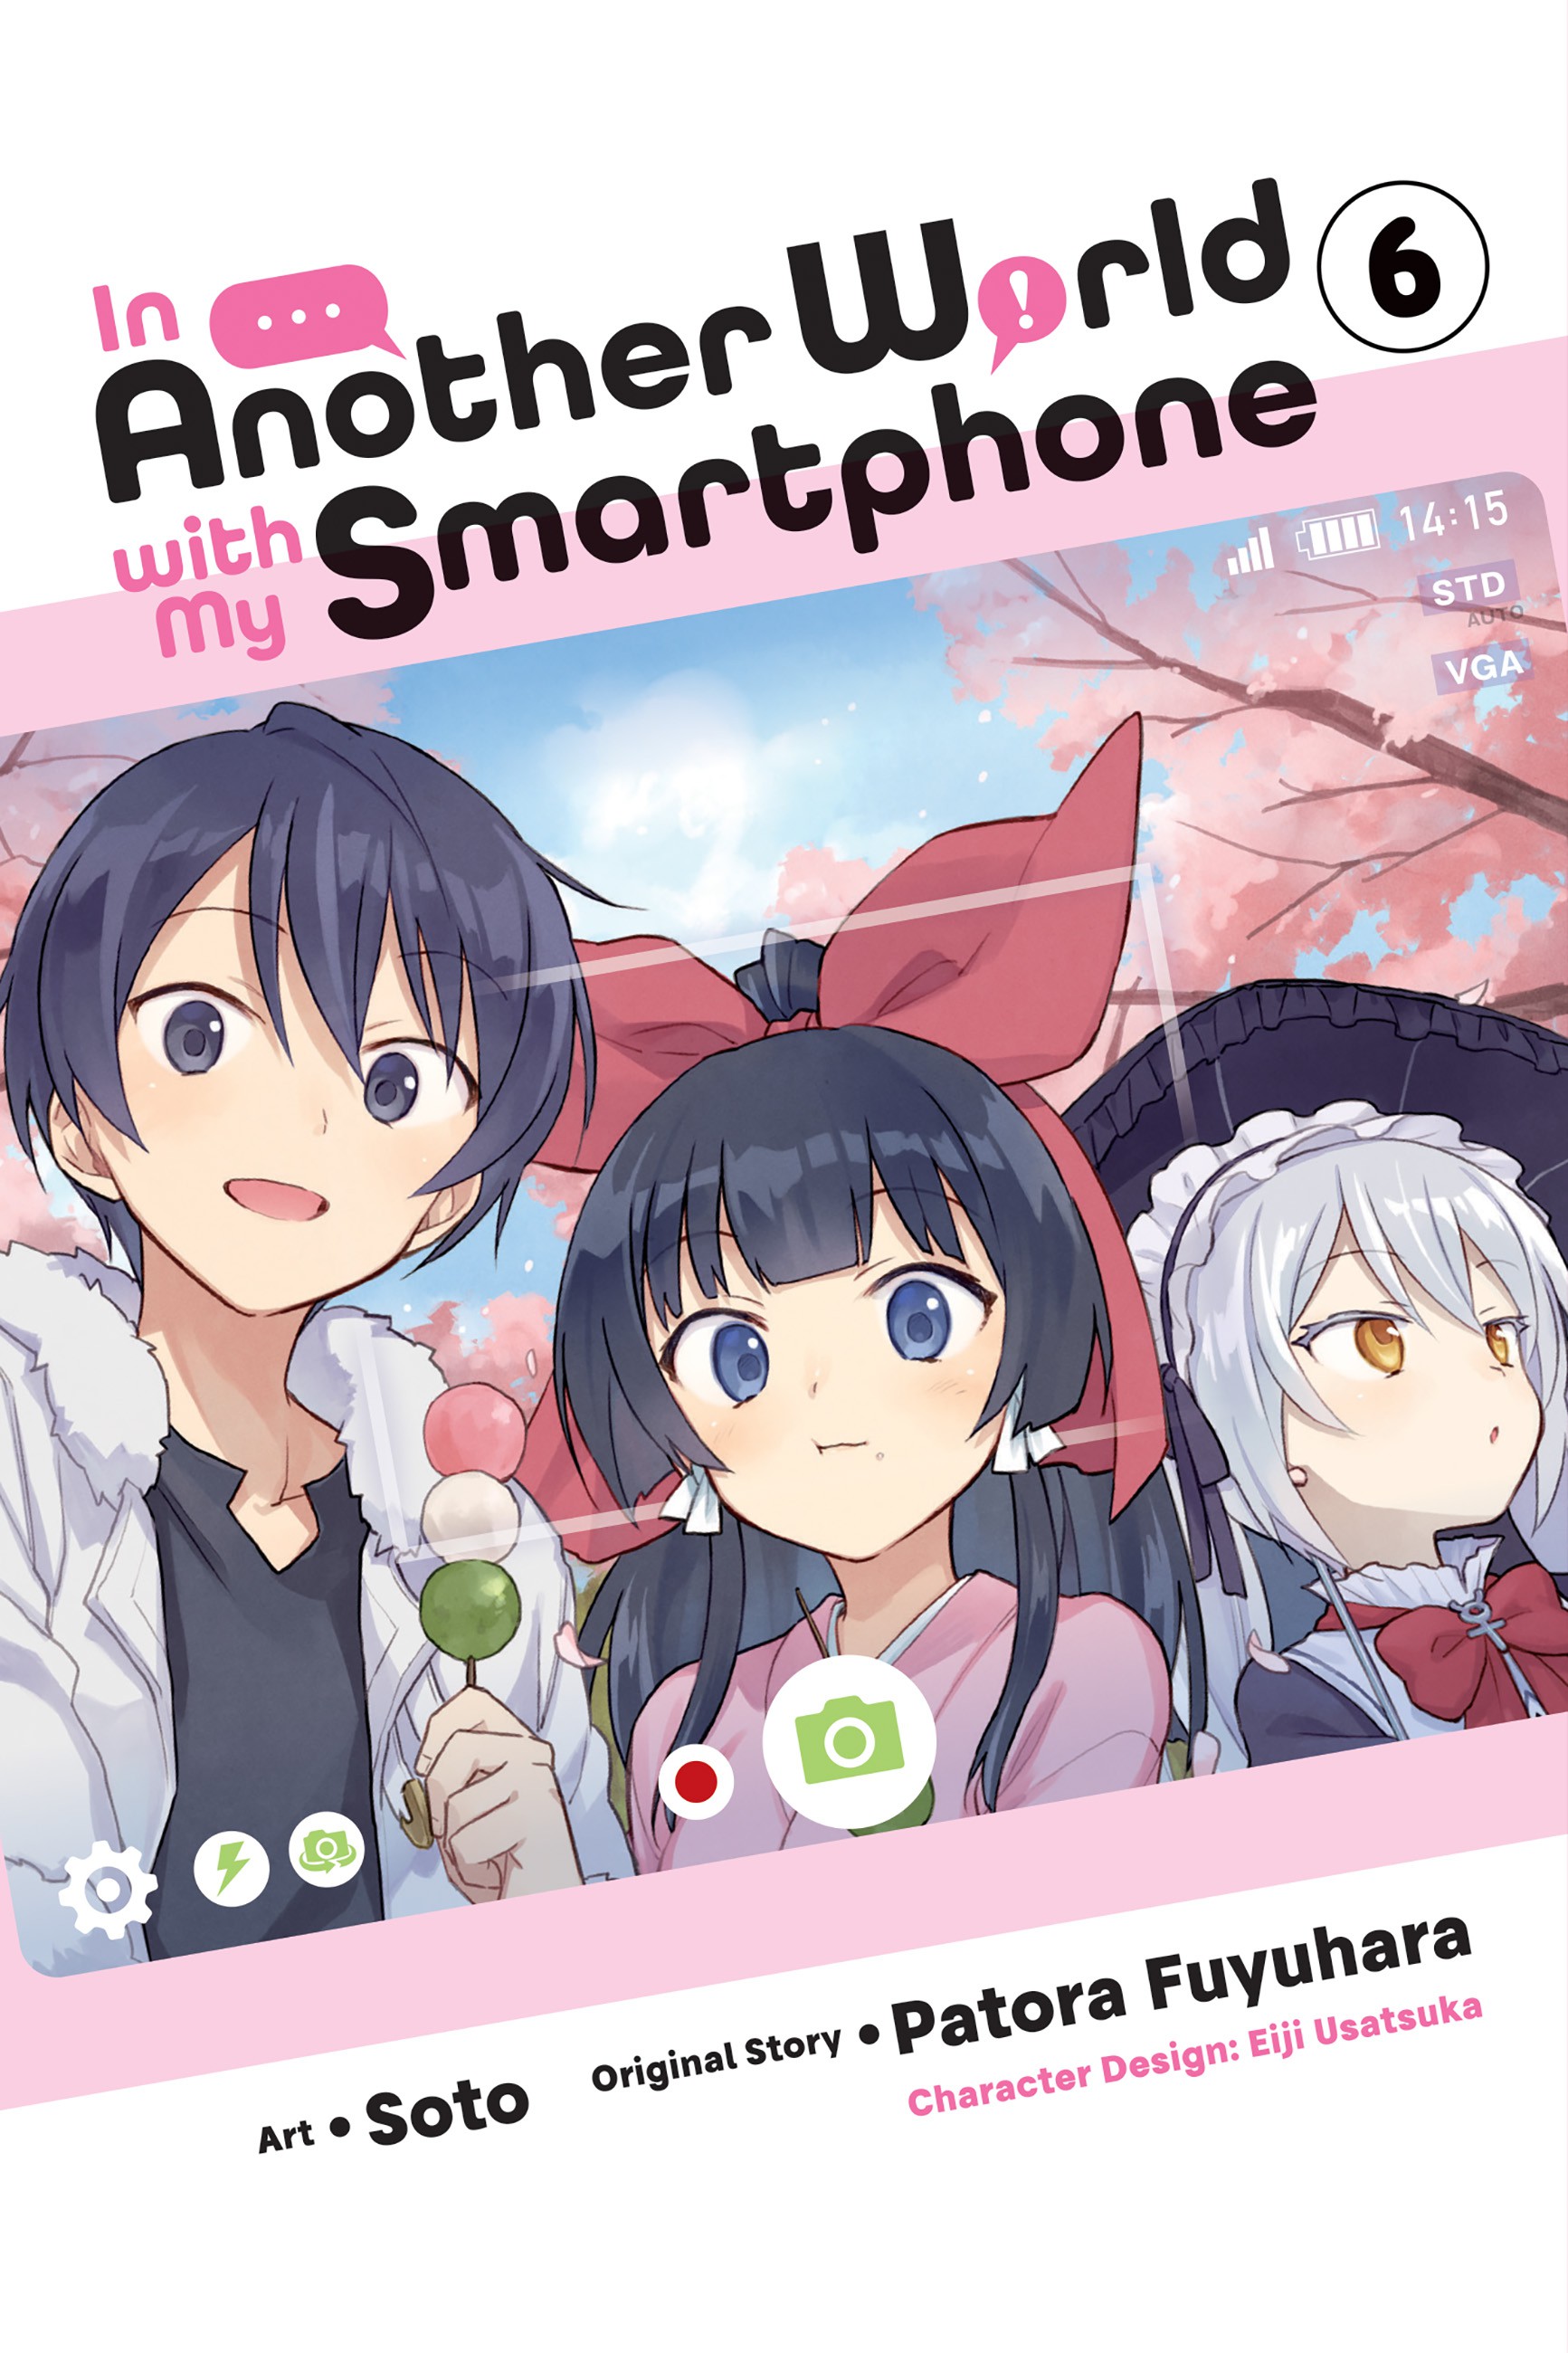 CDJapan : Isekai wa Smartphone to tomo ni. (In Another World With My  Smartphone) 10 (HJ NOVELS) Patora Fuyuhara / Eiji Usatsuka BOOK